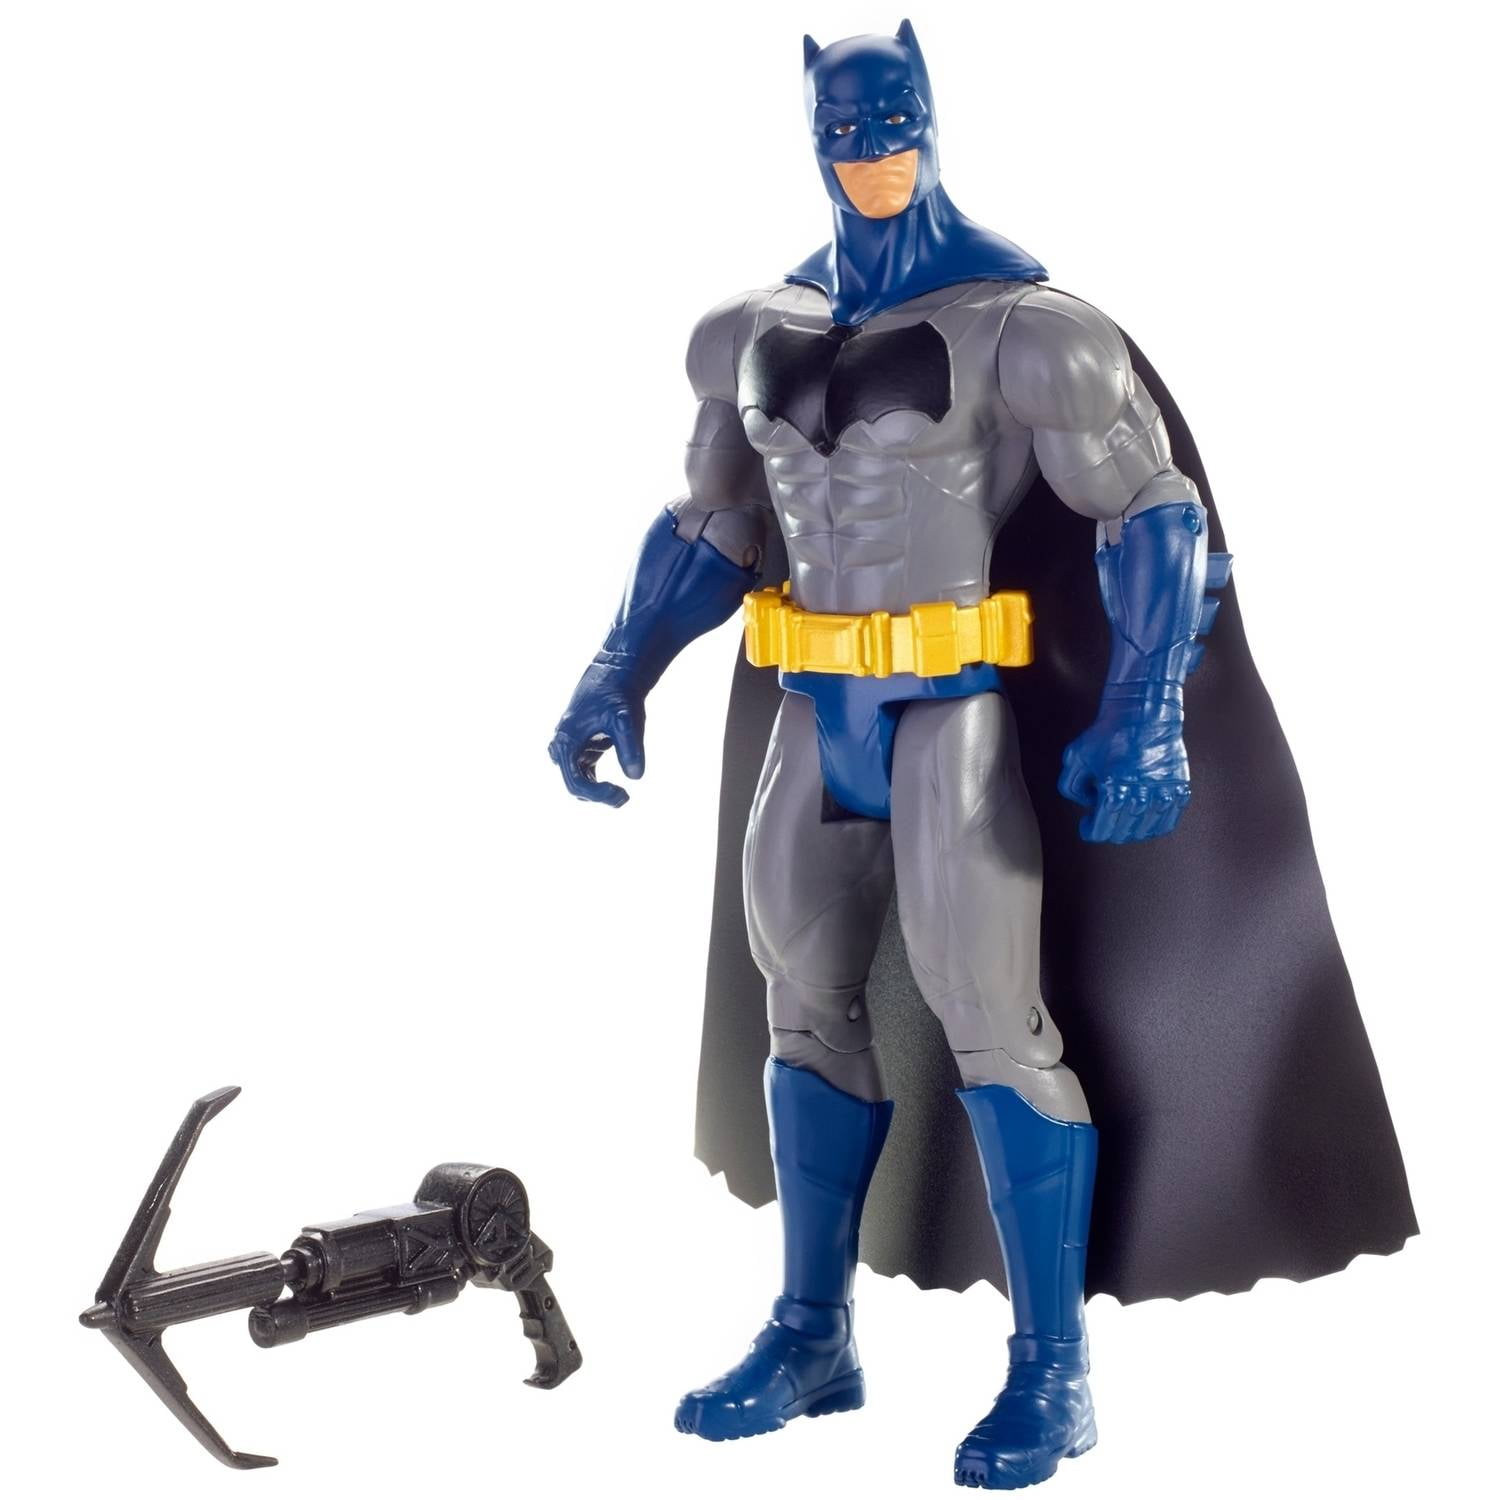 Mattel Year 2014 DC Comics Multiverse Batman Arkham Origins Series 4 Inch Tall Action Figure CDW40 with Grey Belt SG_B00WHDDYJ2_US BATMAN